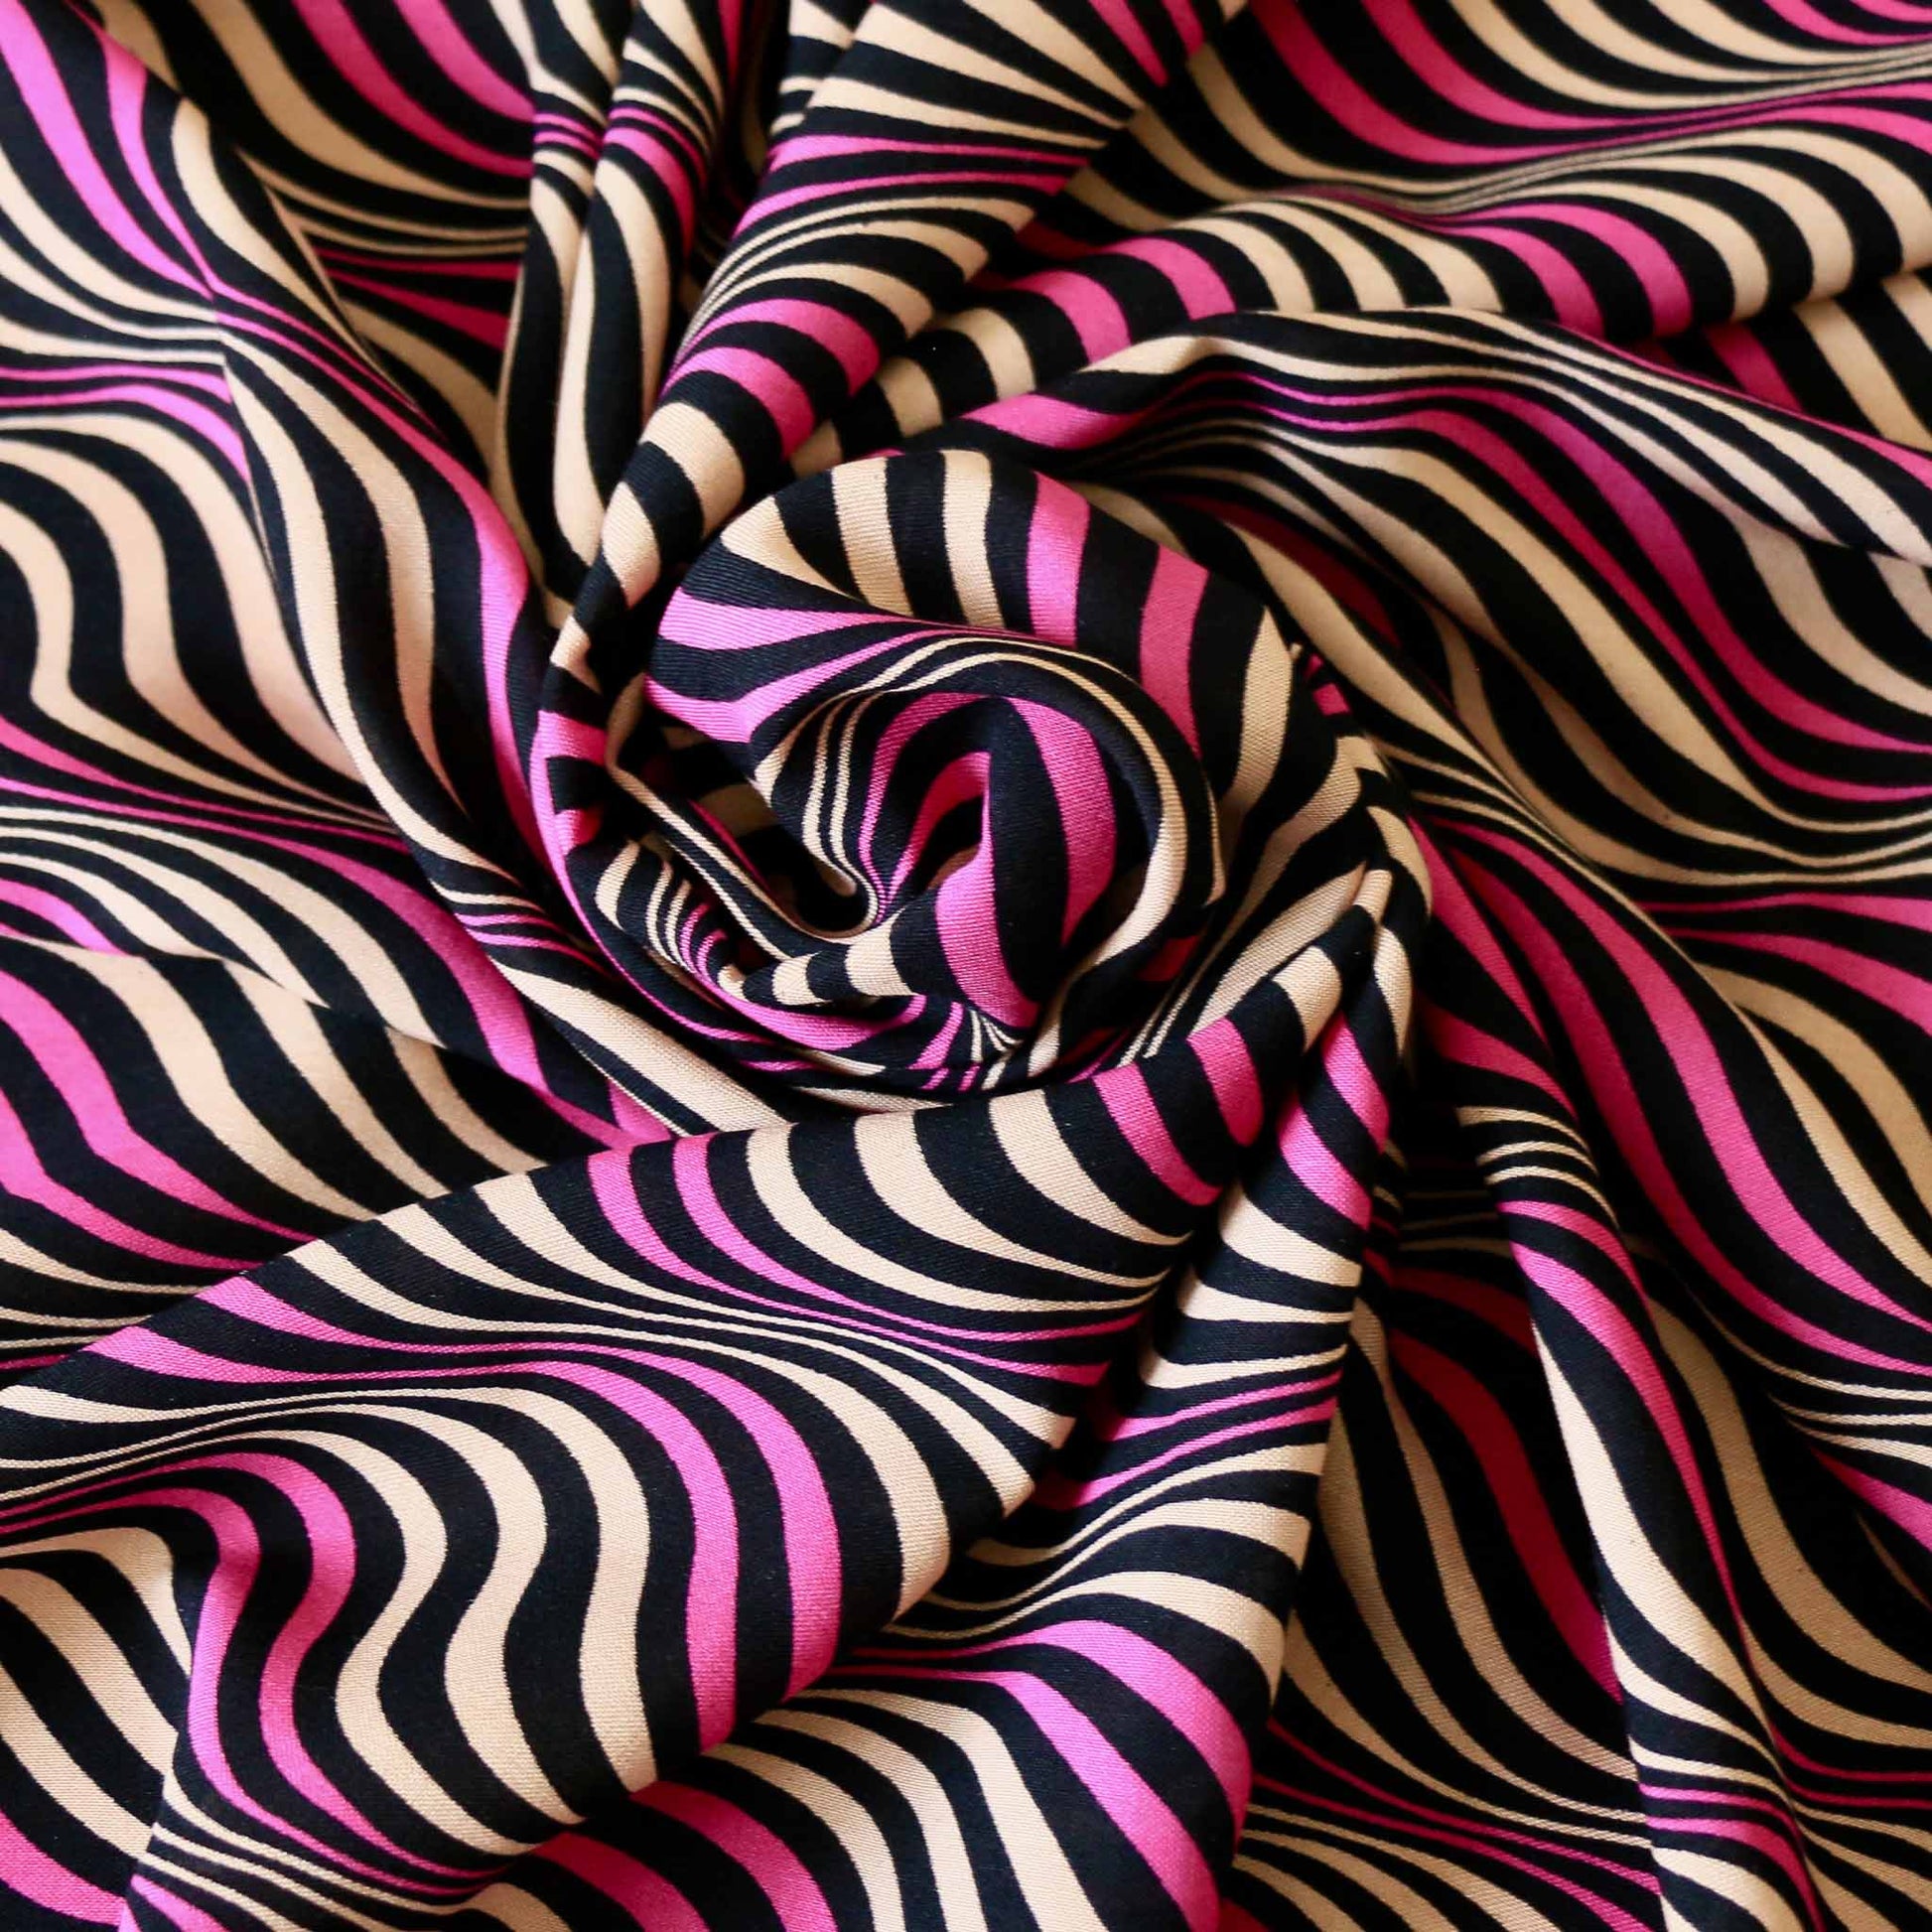 wavey striped viscose challis dressmaking rayon fabric in beige and purple on black